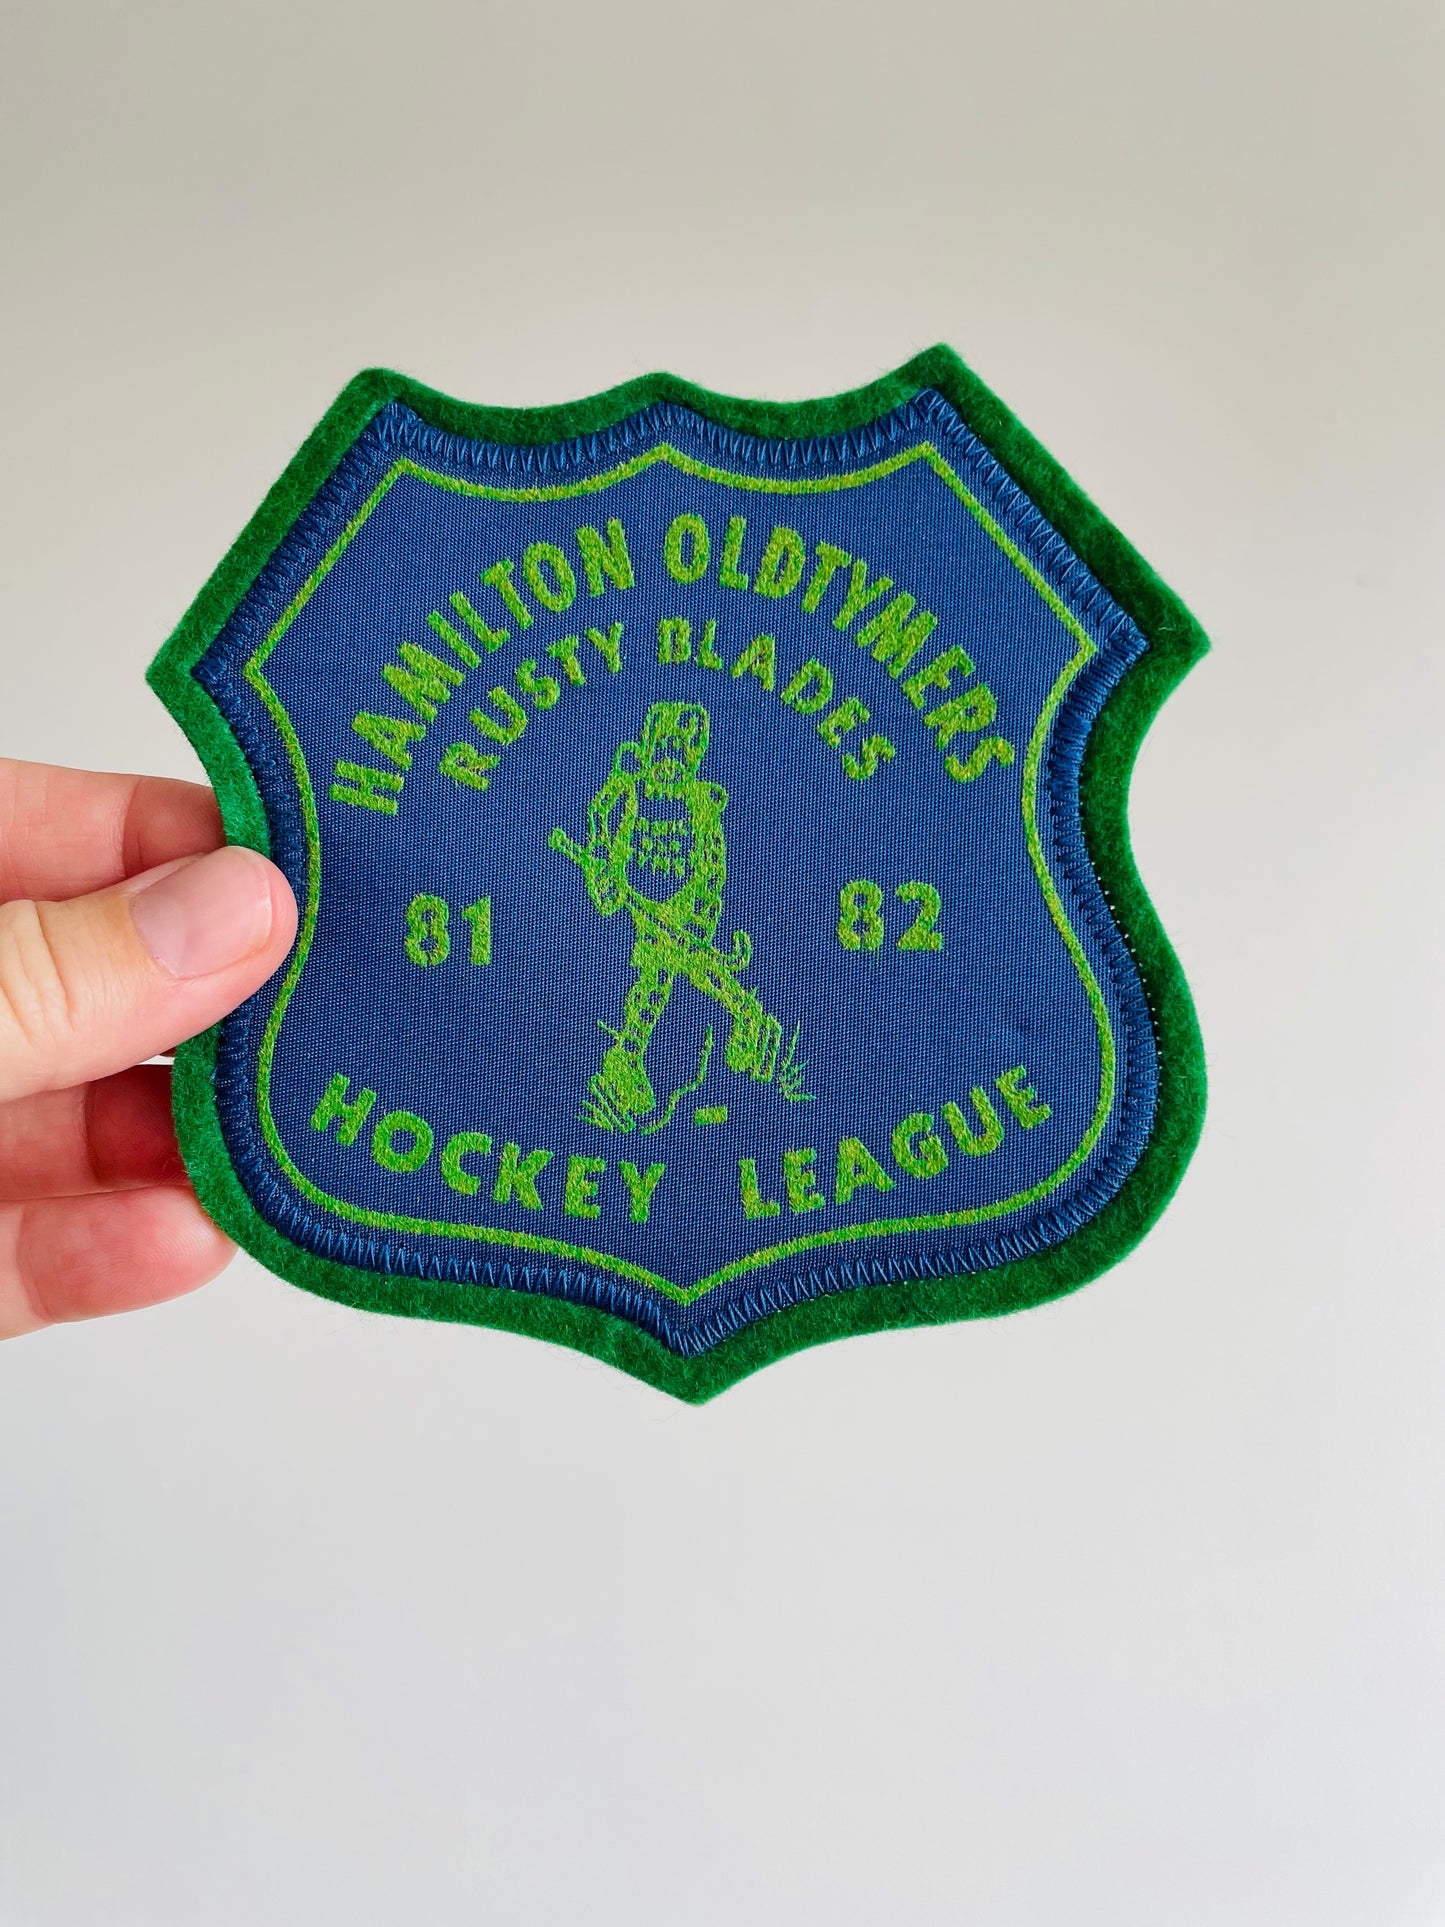 Vintage Felt Hockey Patch - 1981 / 1982 Rusty Blades Hamilton Oldtymers Hockey League #4